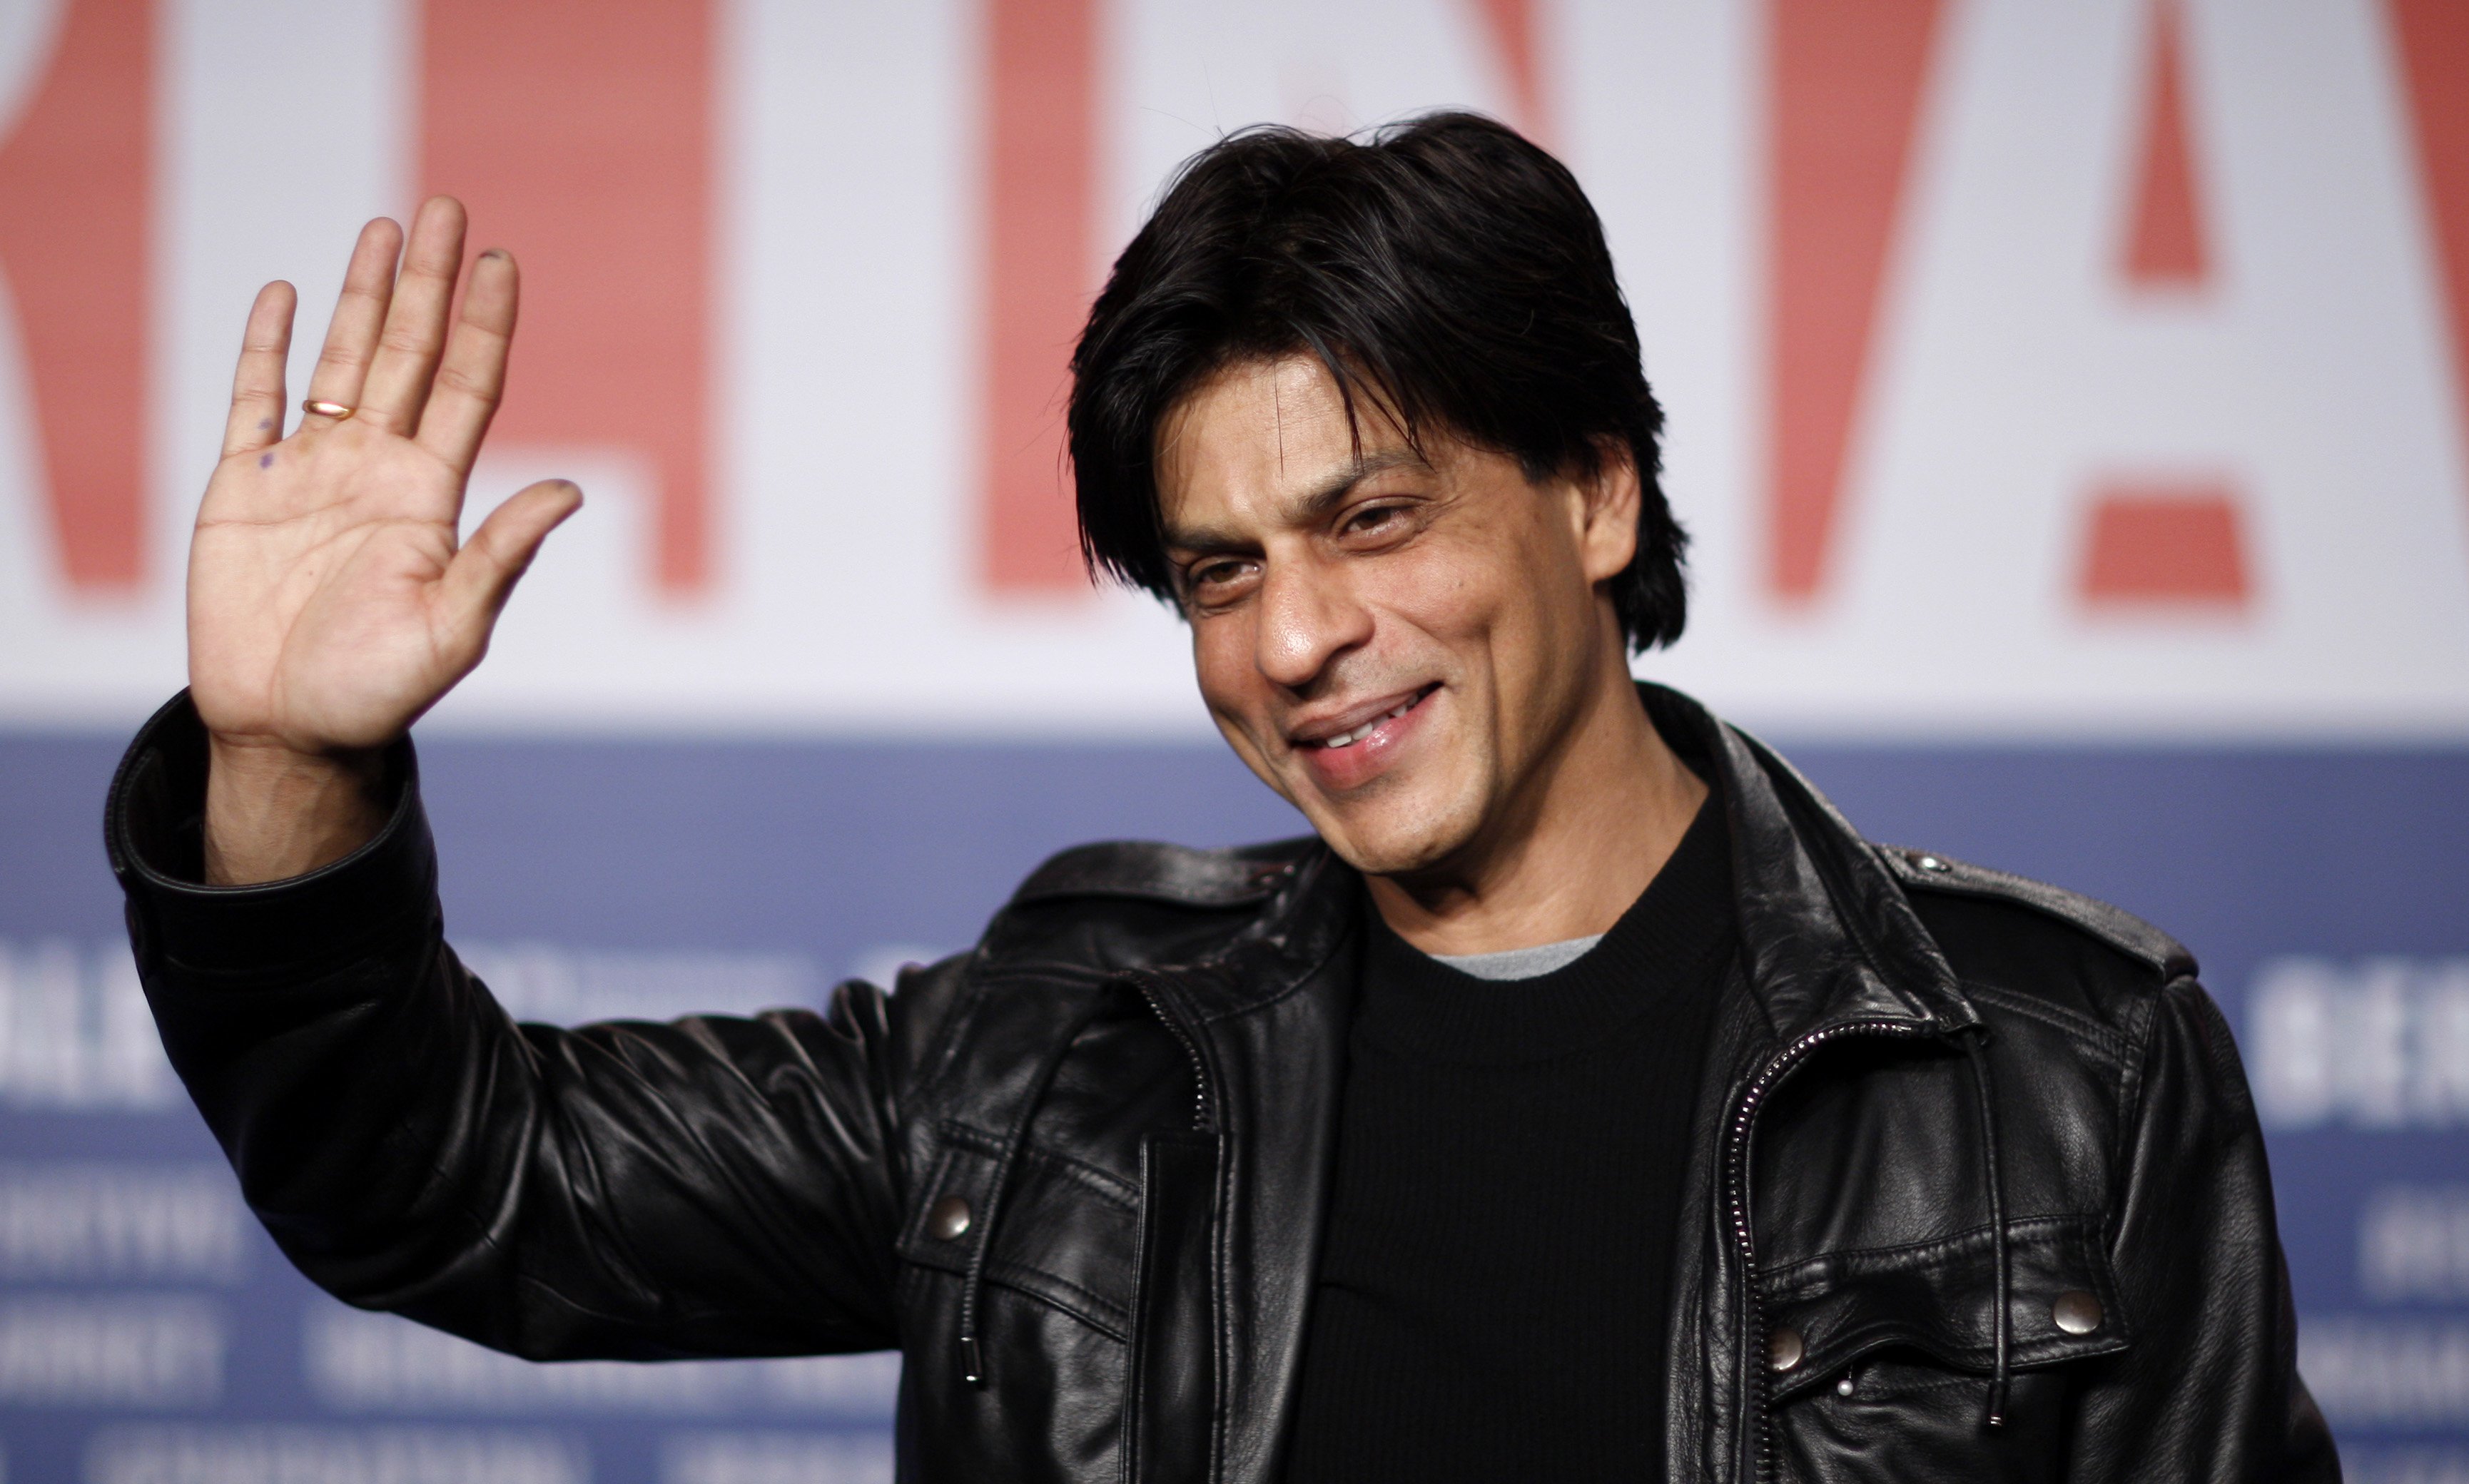 Bollywood superstar Shah Rukh Khan. PHOTO: MASALA.COM